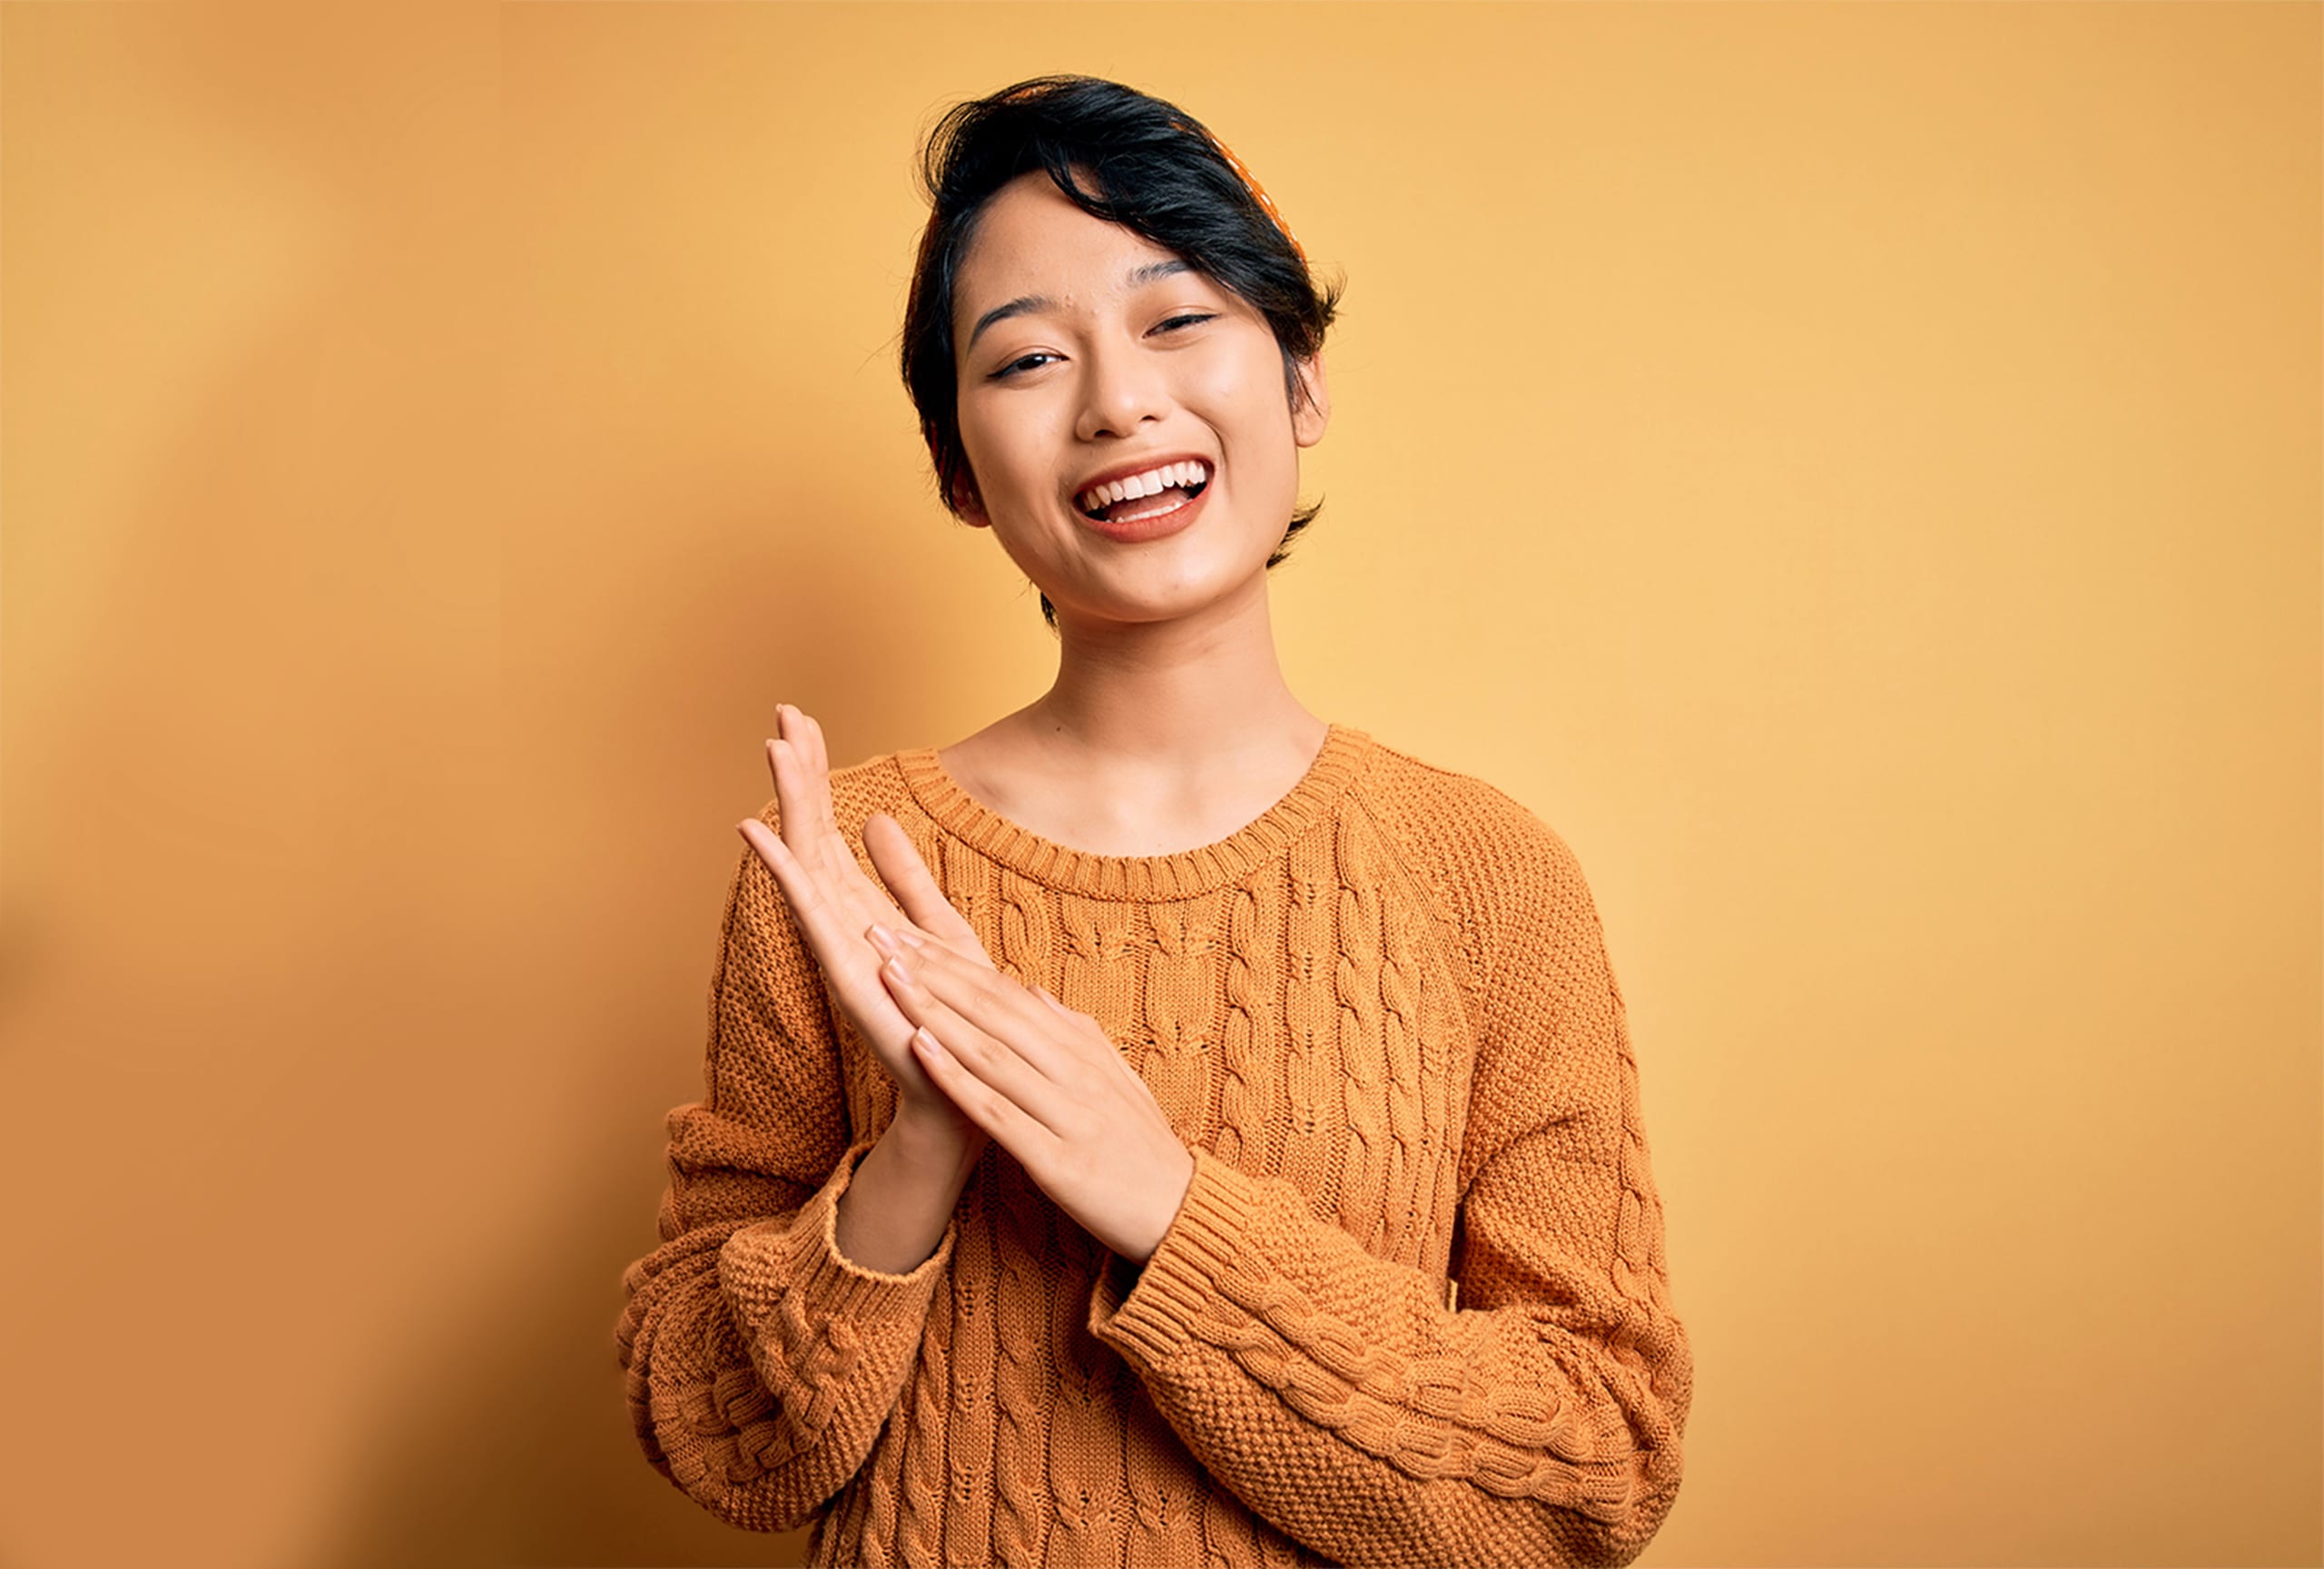 Beautiful Asian girl in a yellow sweater smiling